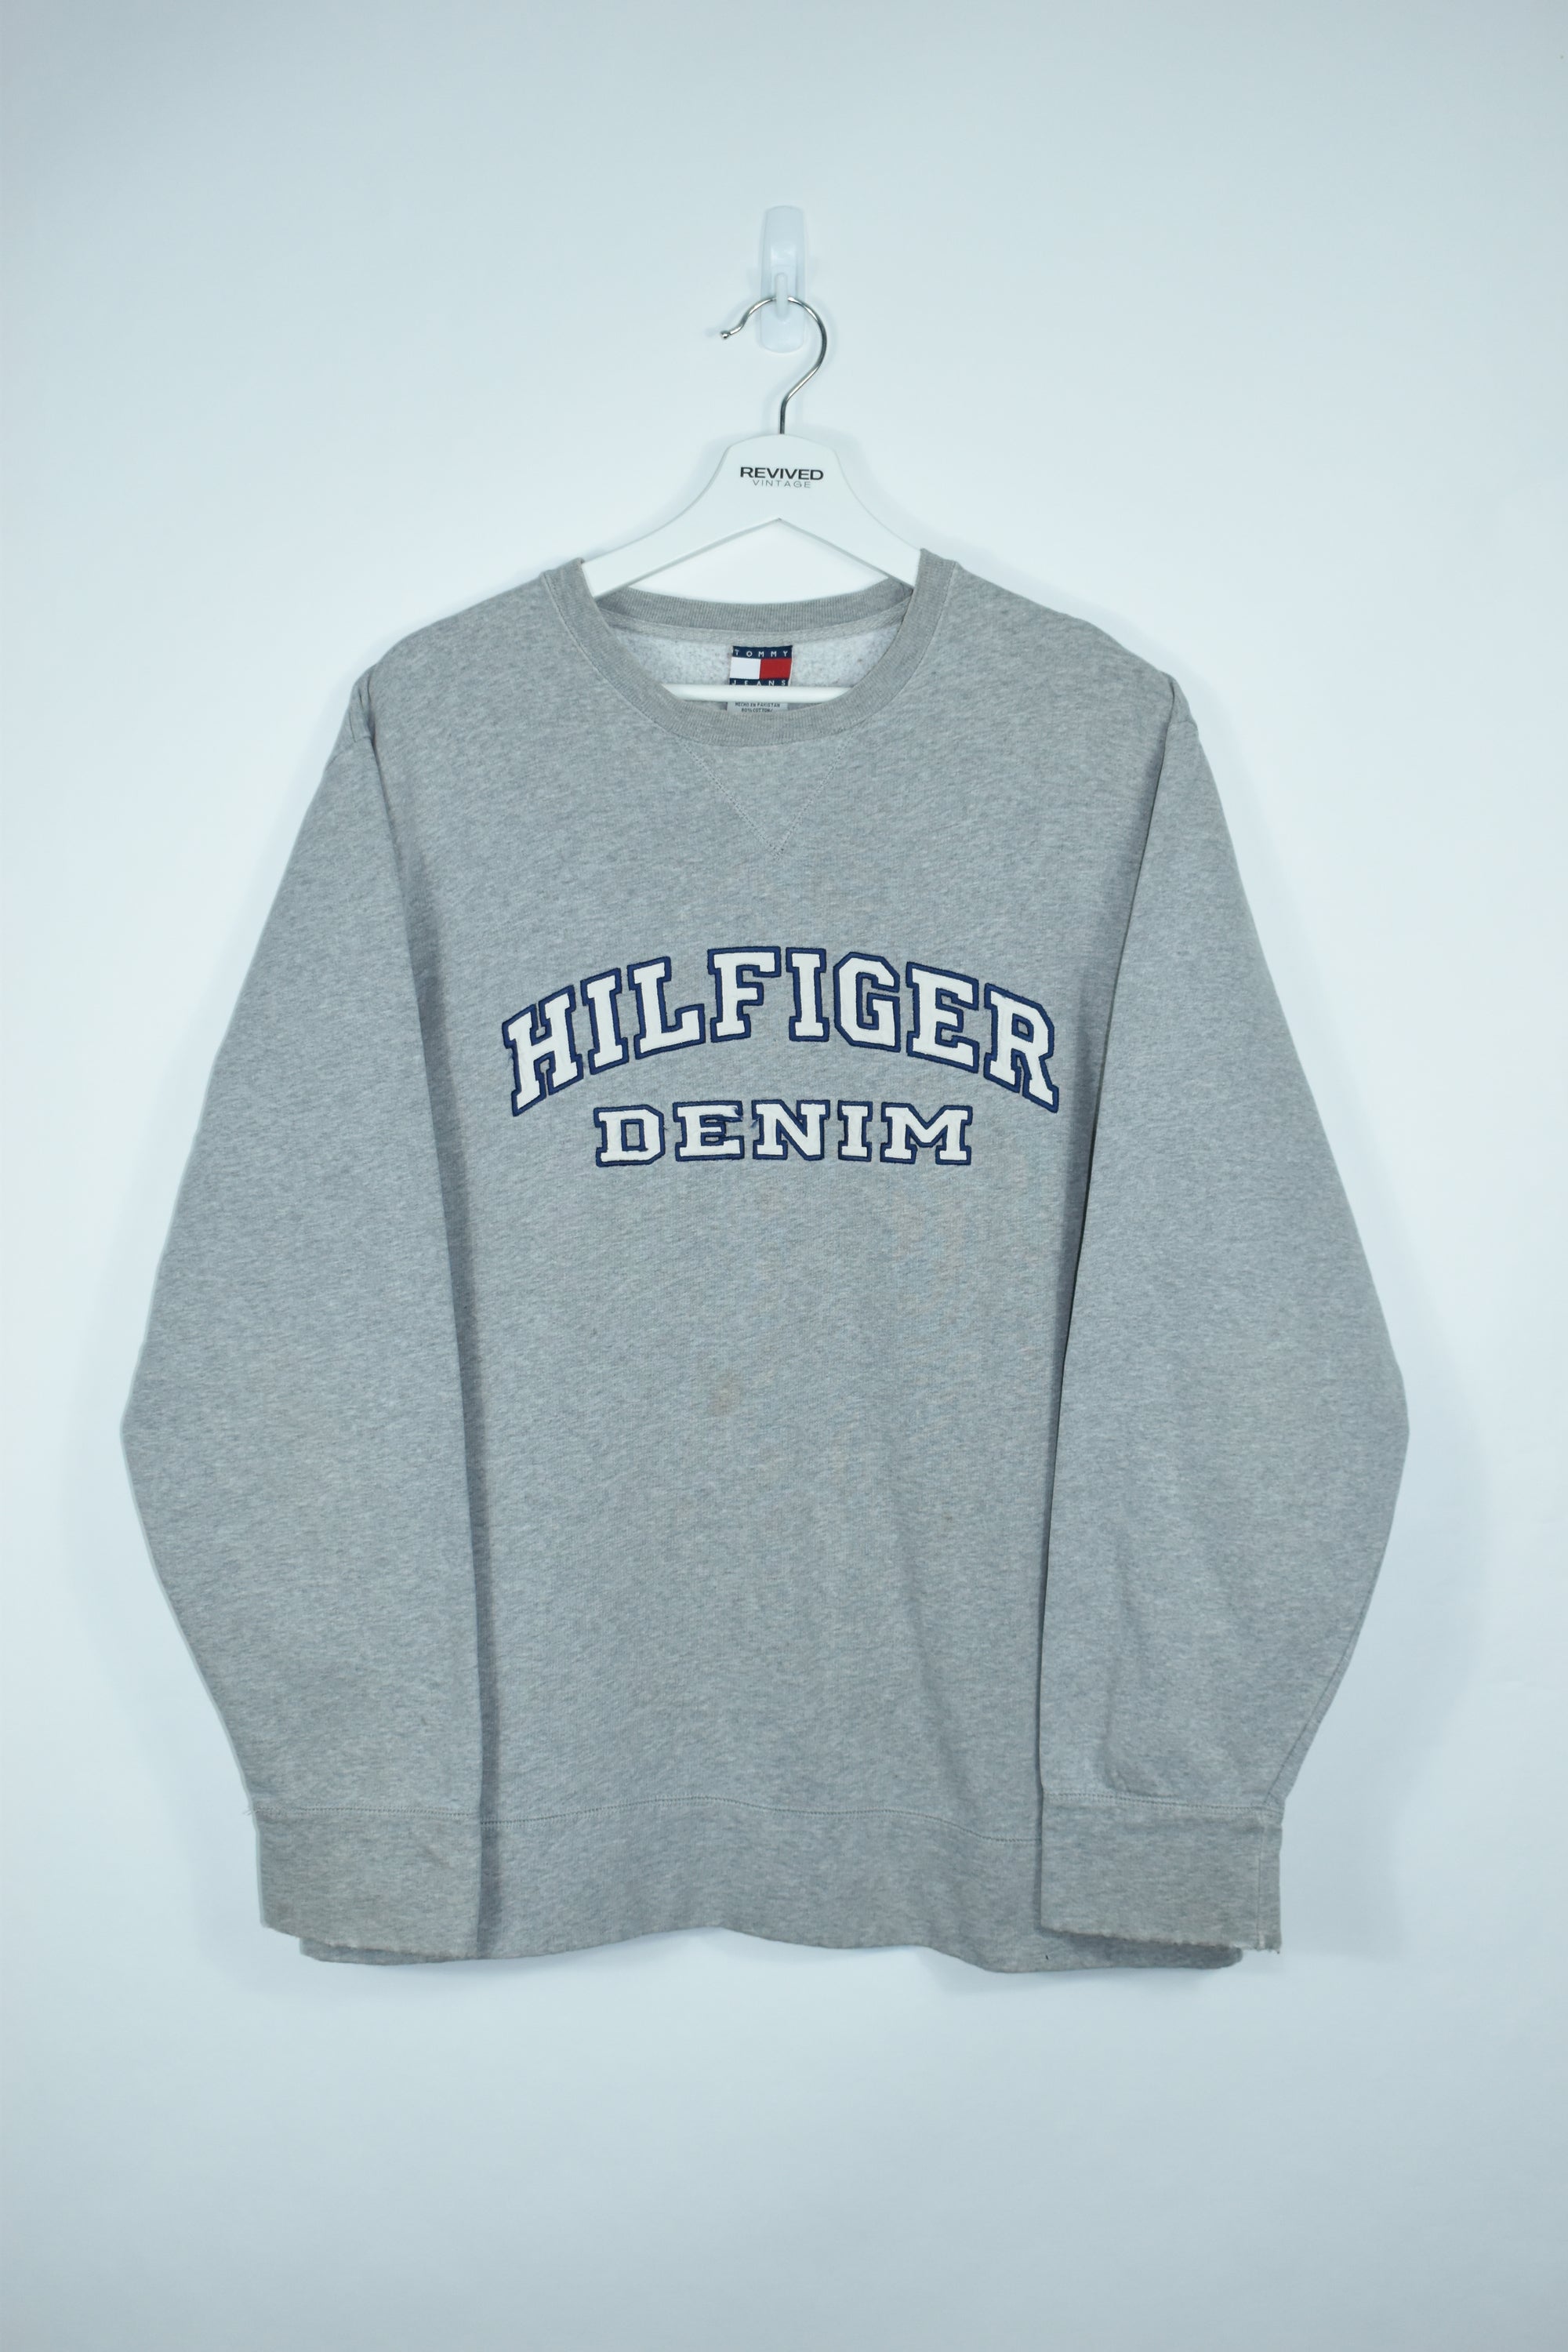 Vintage Tommy Hilfiger Denim Embroidery Sweatshirt LARGE